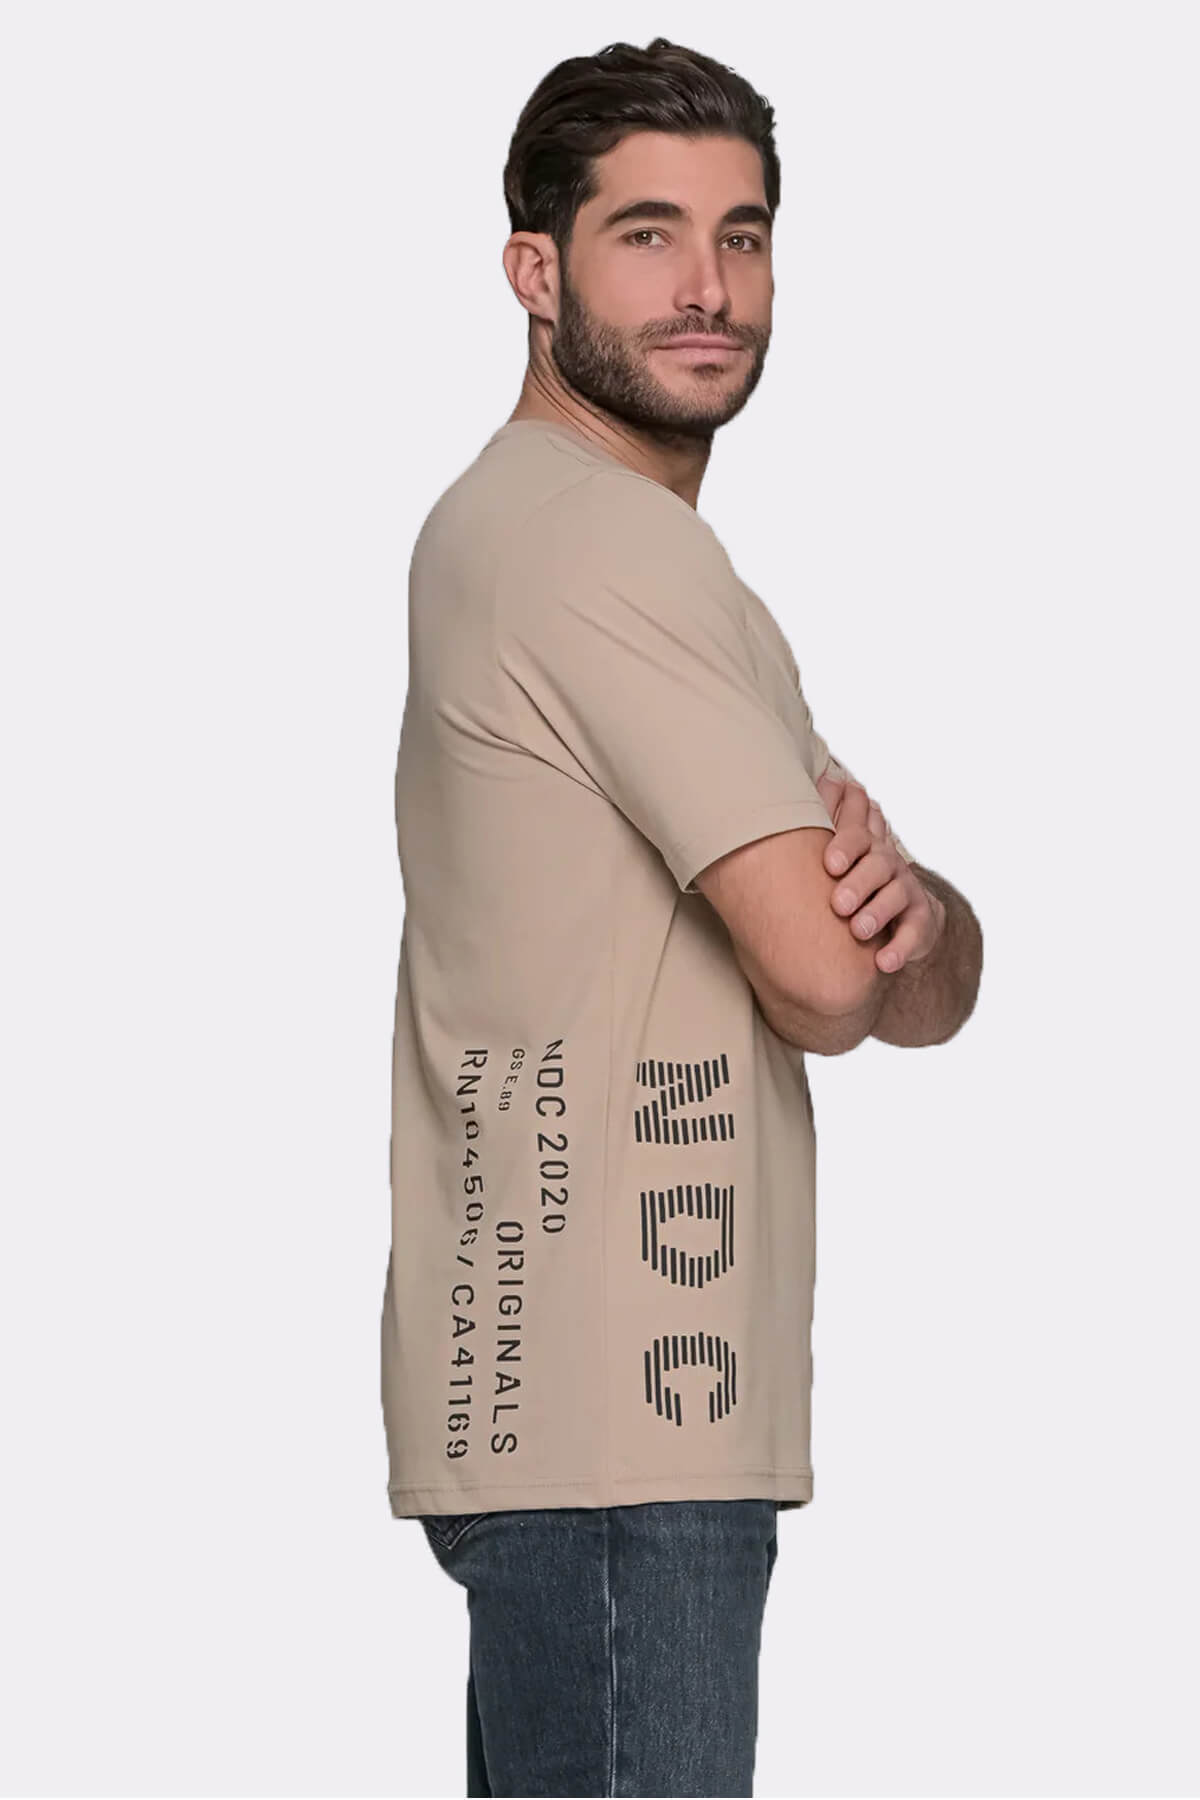 NDC T-shirt Side Printed Logo